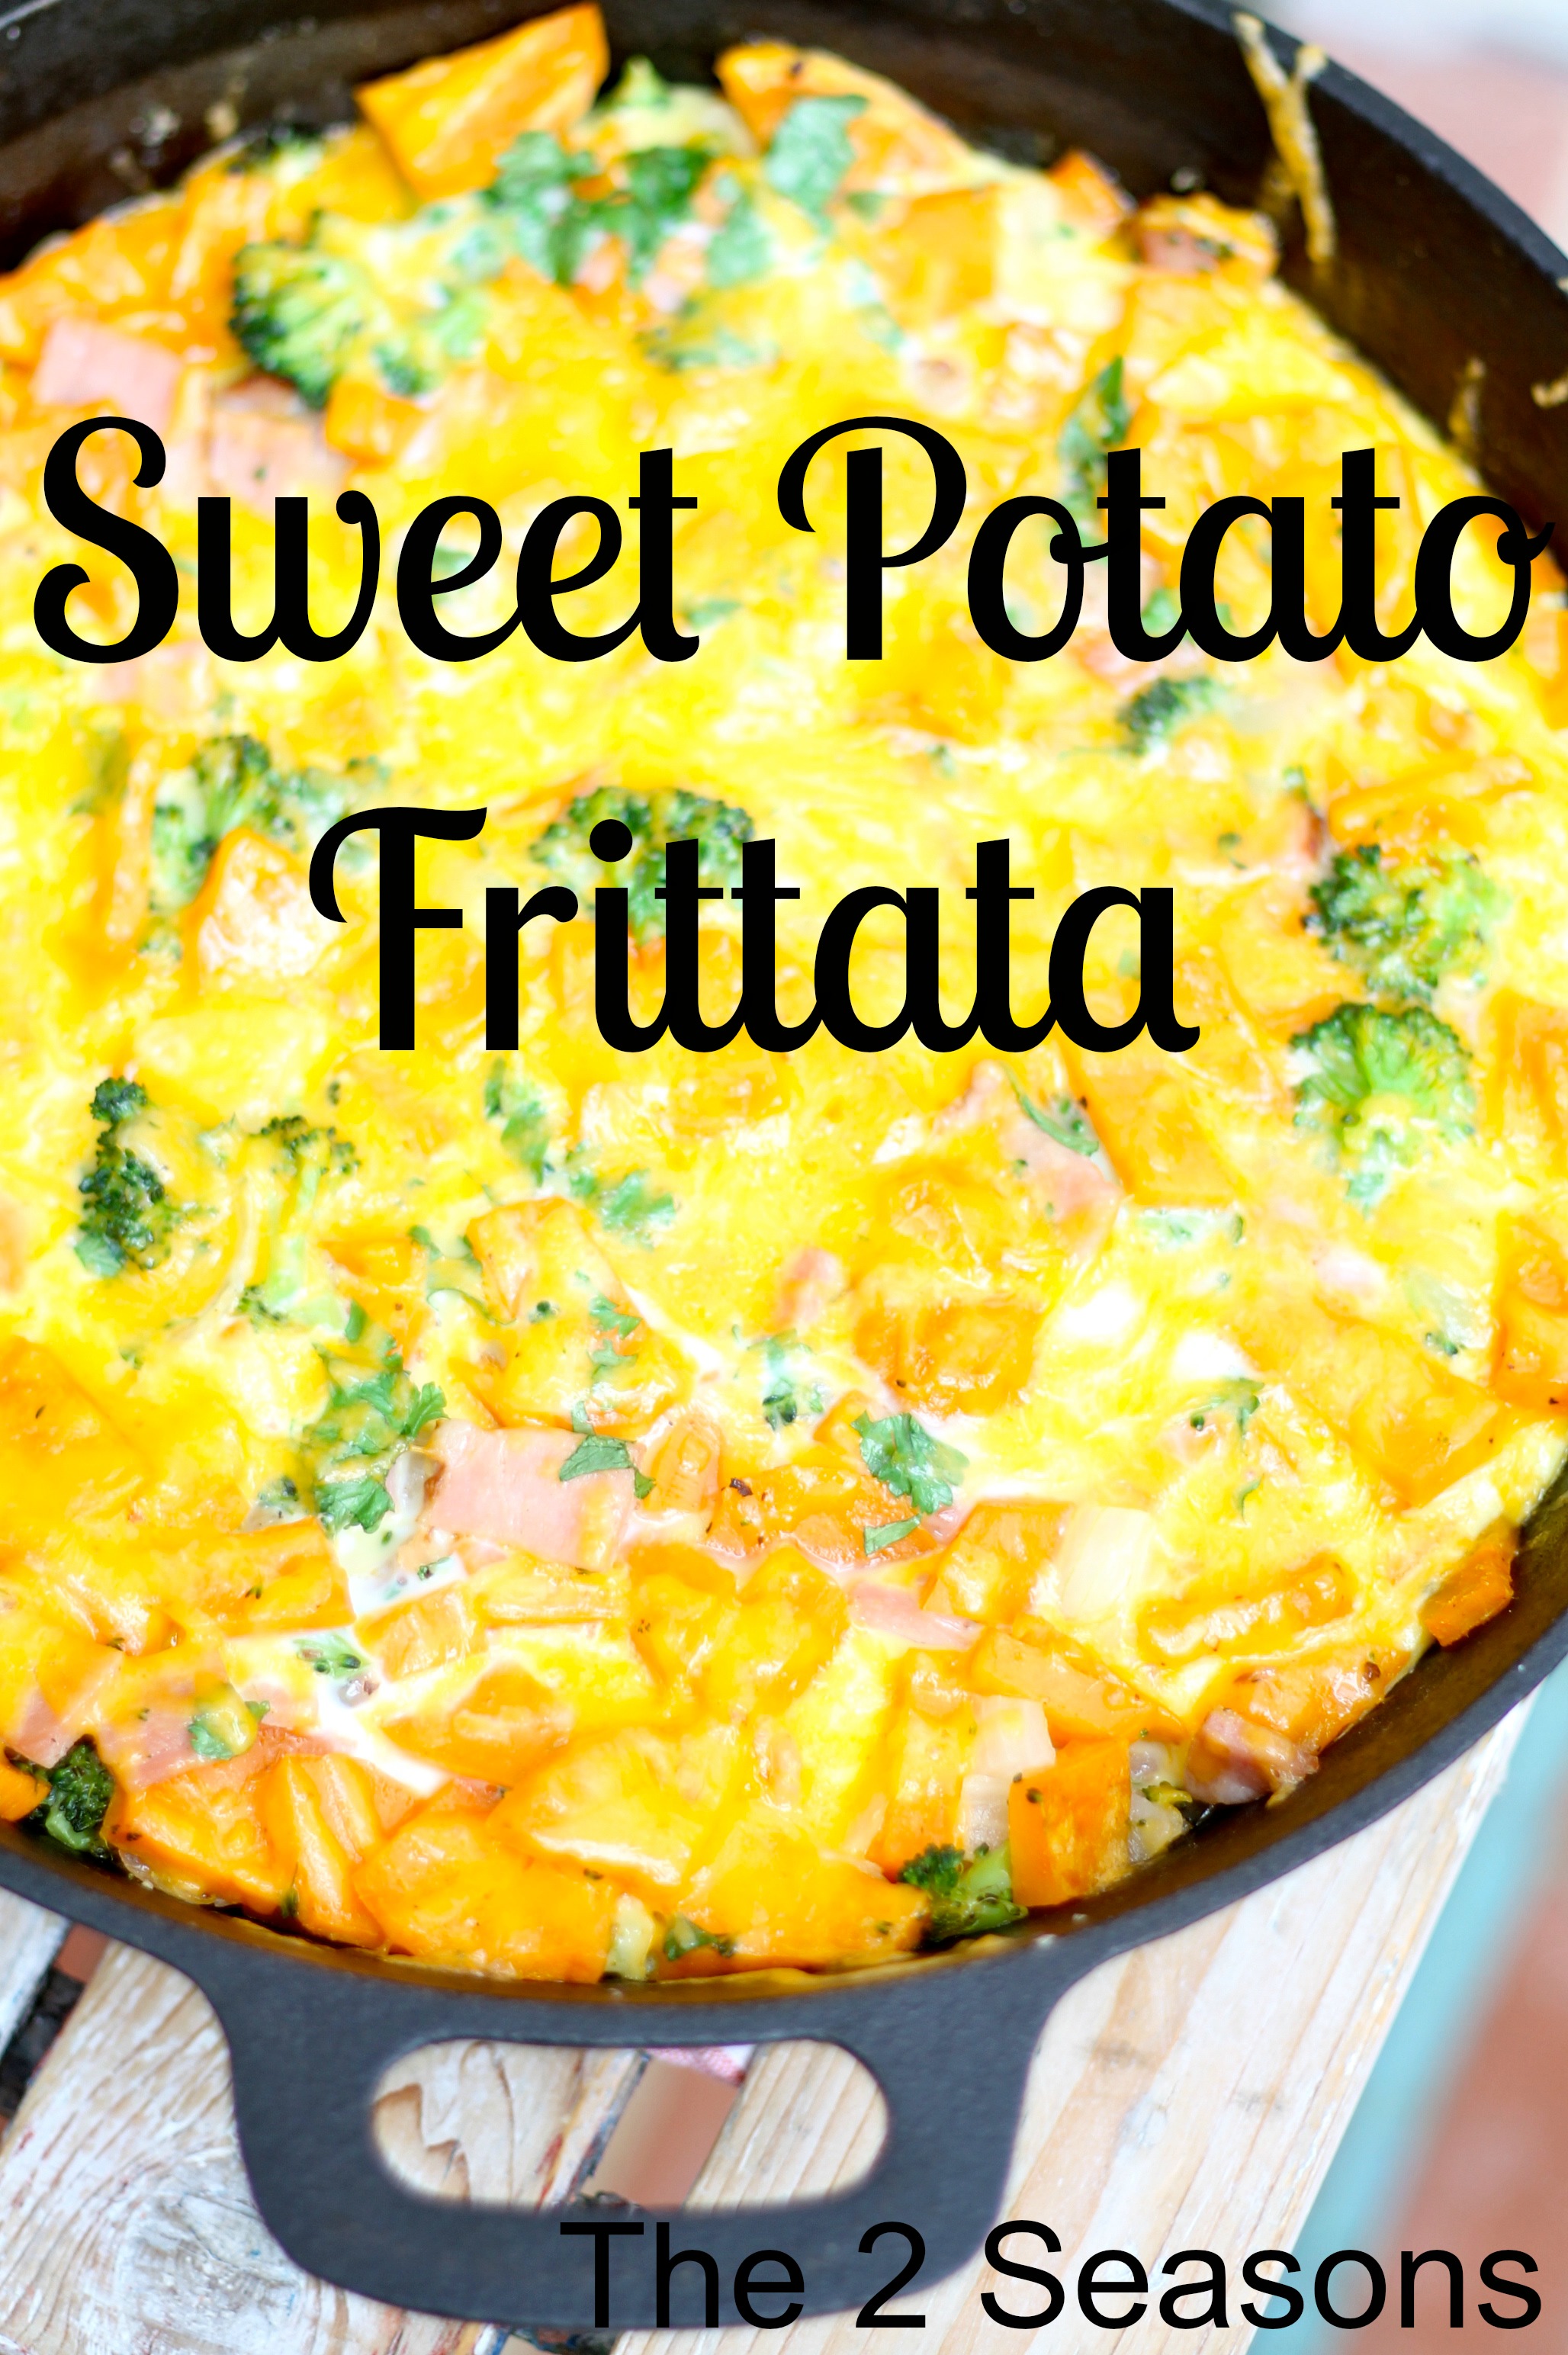 Sweet Potato Frittata - Savory Dutch Baby